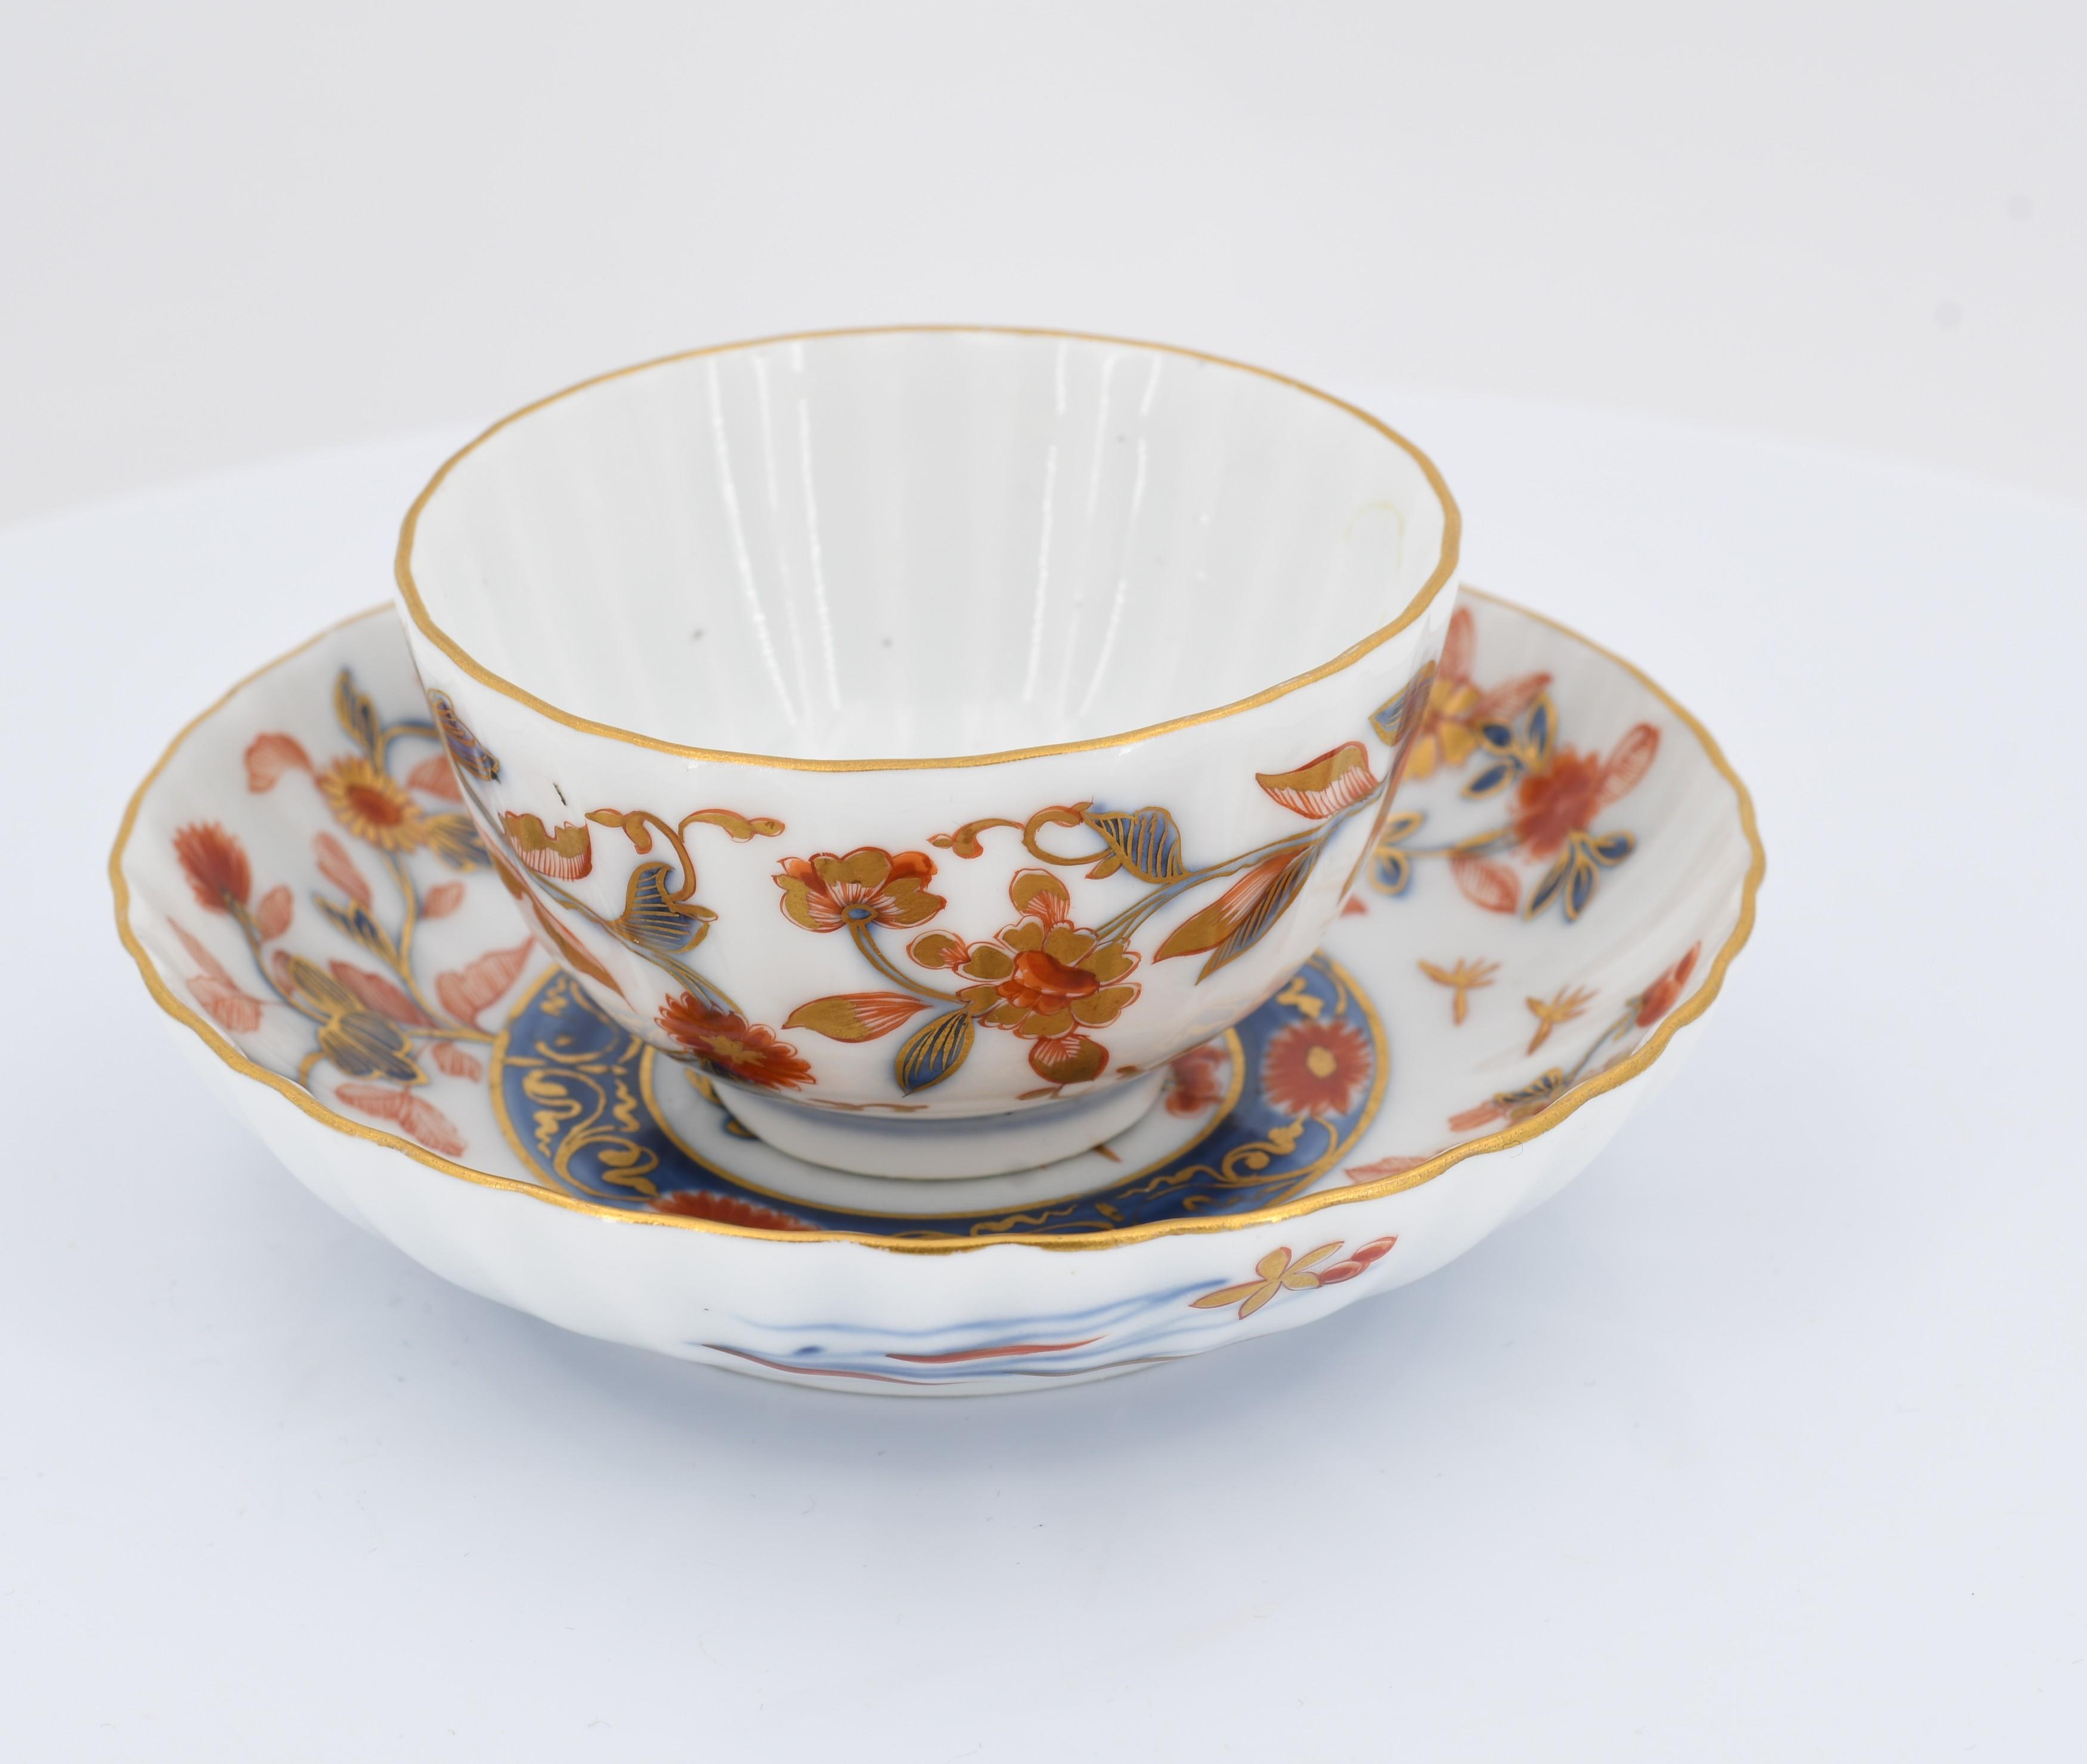 Tea bowl and saucer with Imari décor - Image 3 of 7